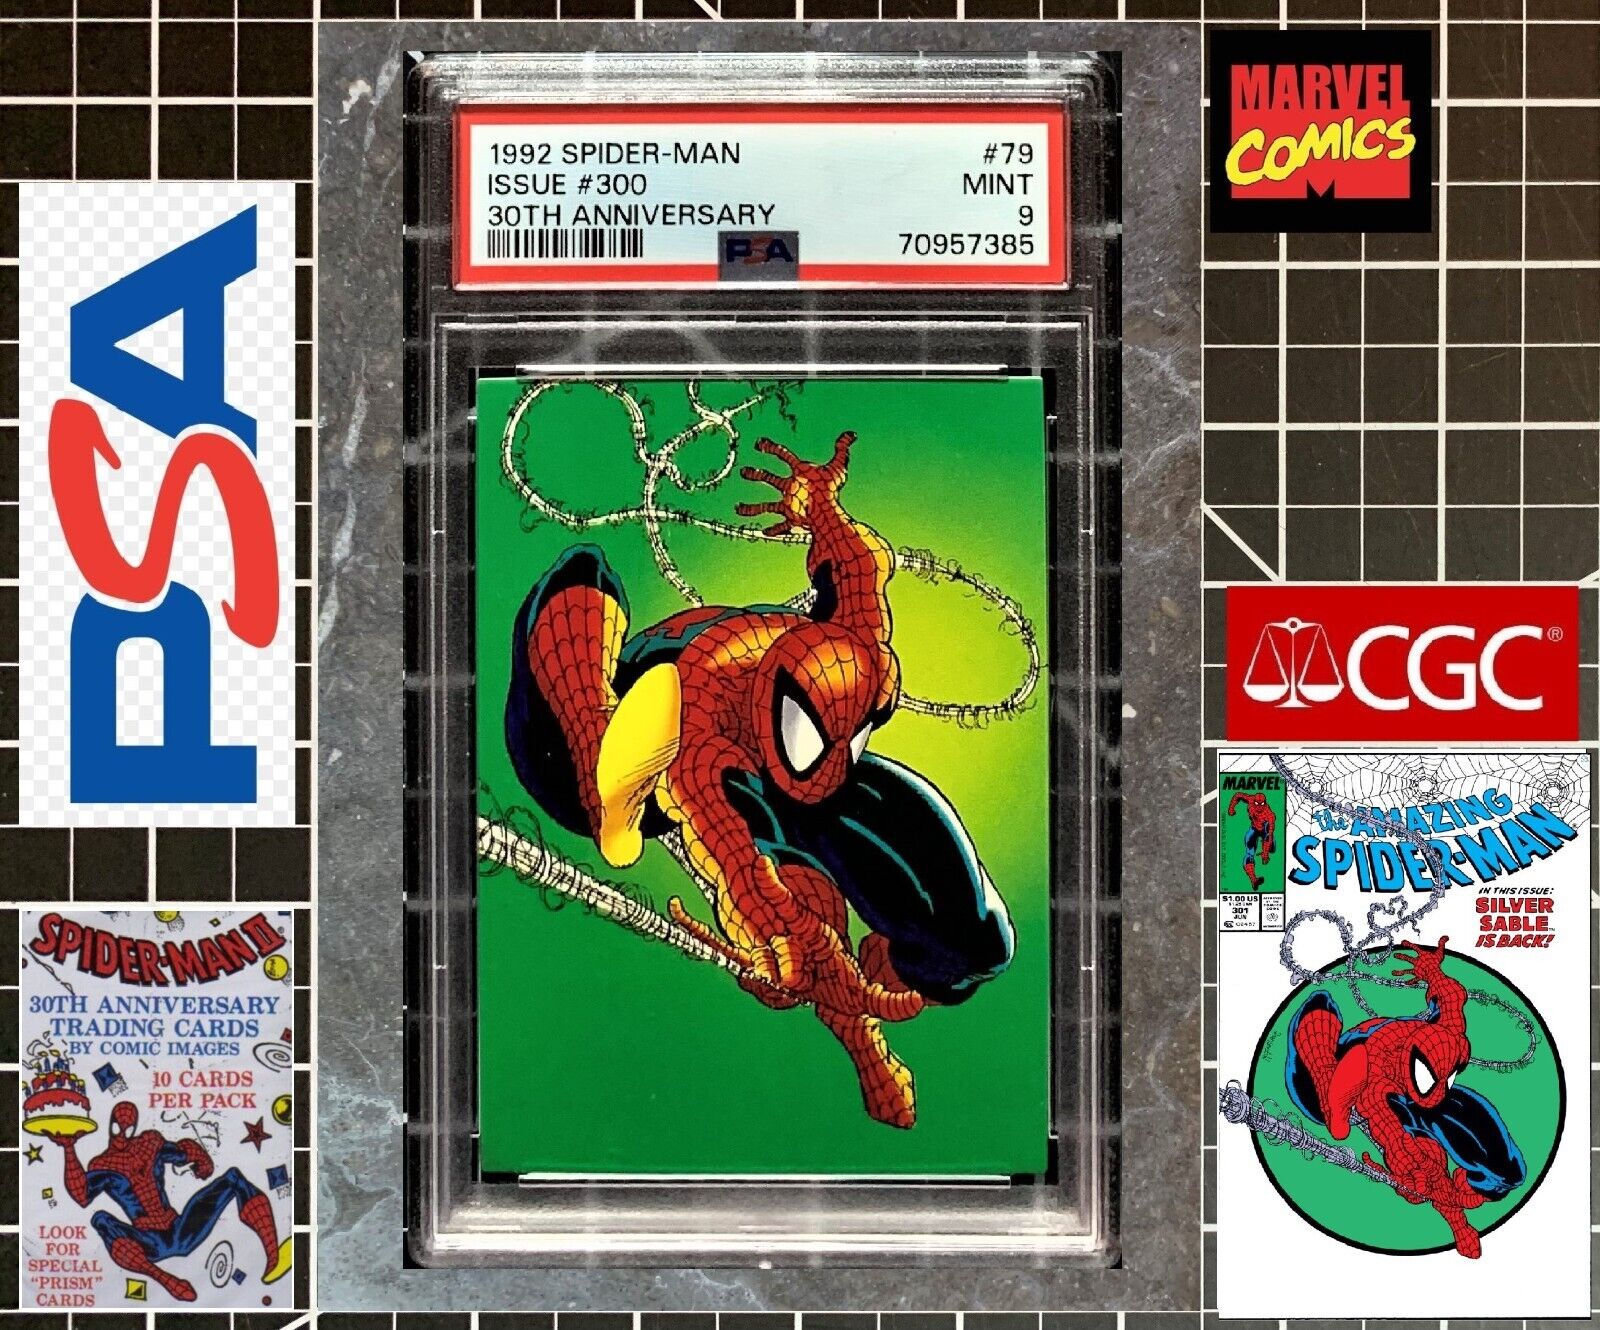 Marvel Comic CGC Graded Card Pairing - Amazing Spider-Man Issue #301 PSA 9 MINT